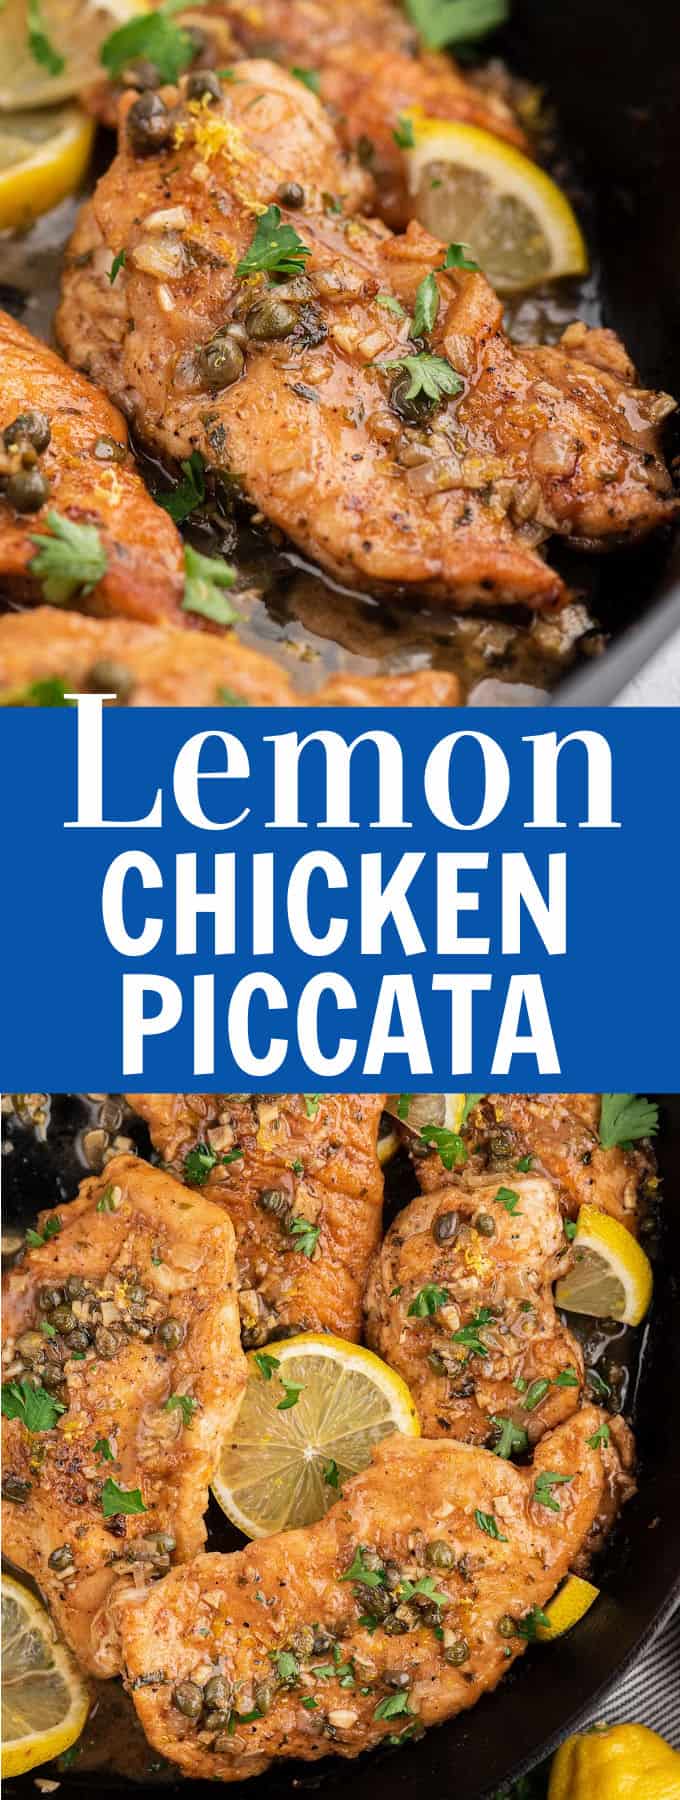 chicken piccata fillets in a black skillet surrounded by lemon slices.